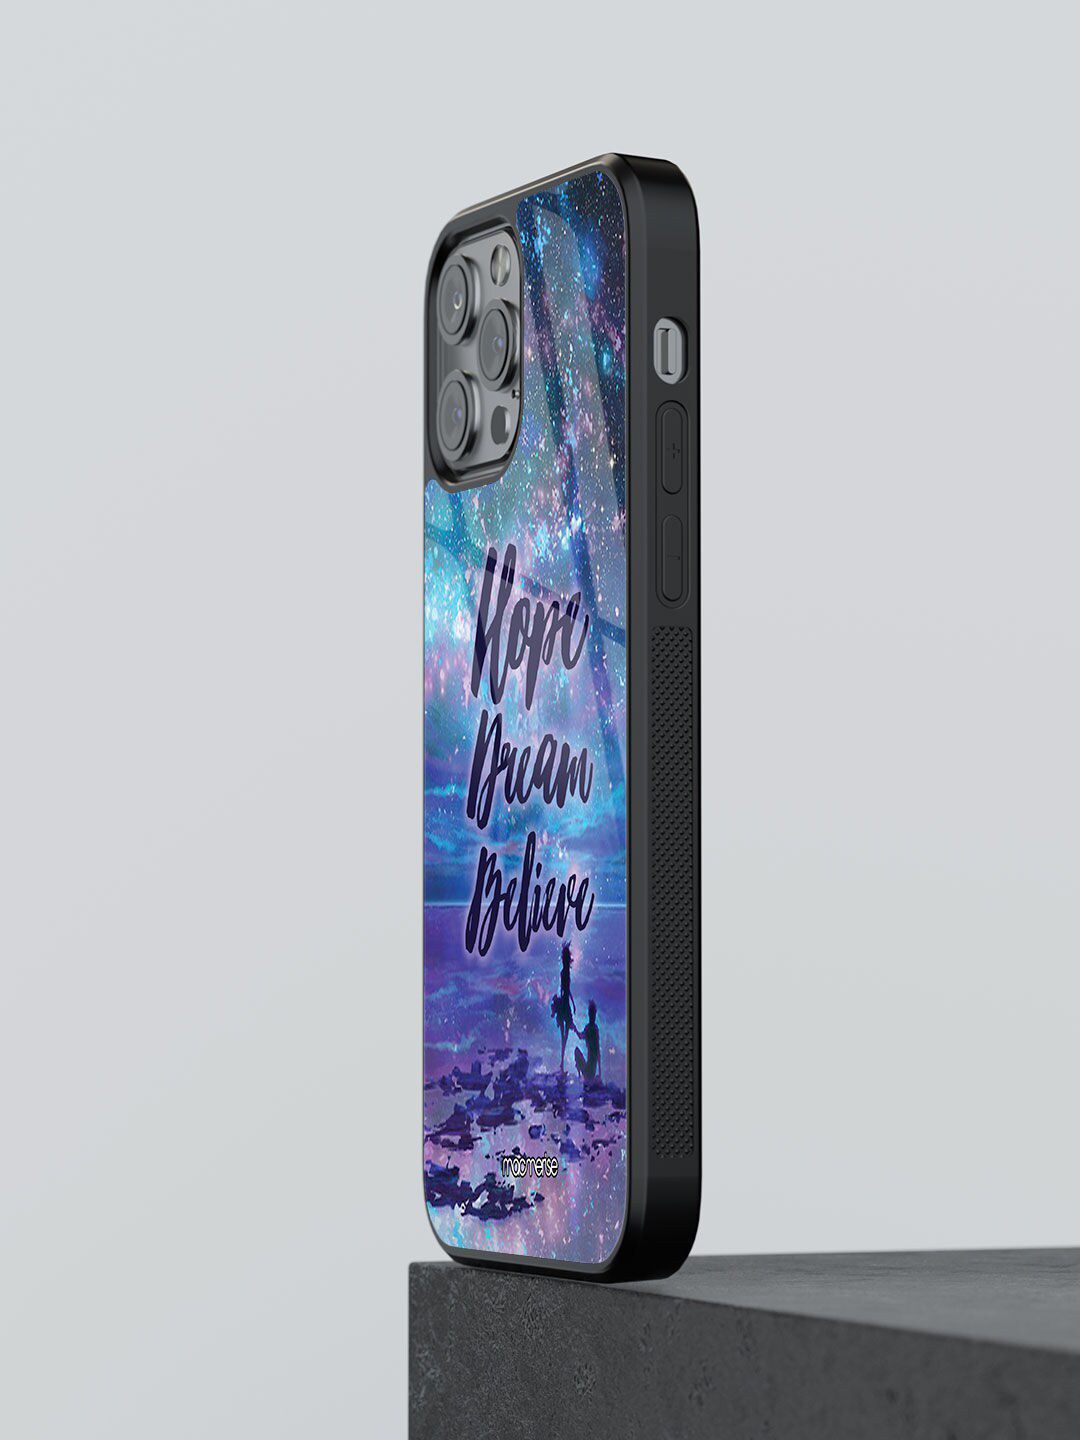 macmerise Blue Hope Dream Believe iPhone 12 Pro Max Back Case Price in India